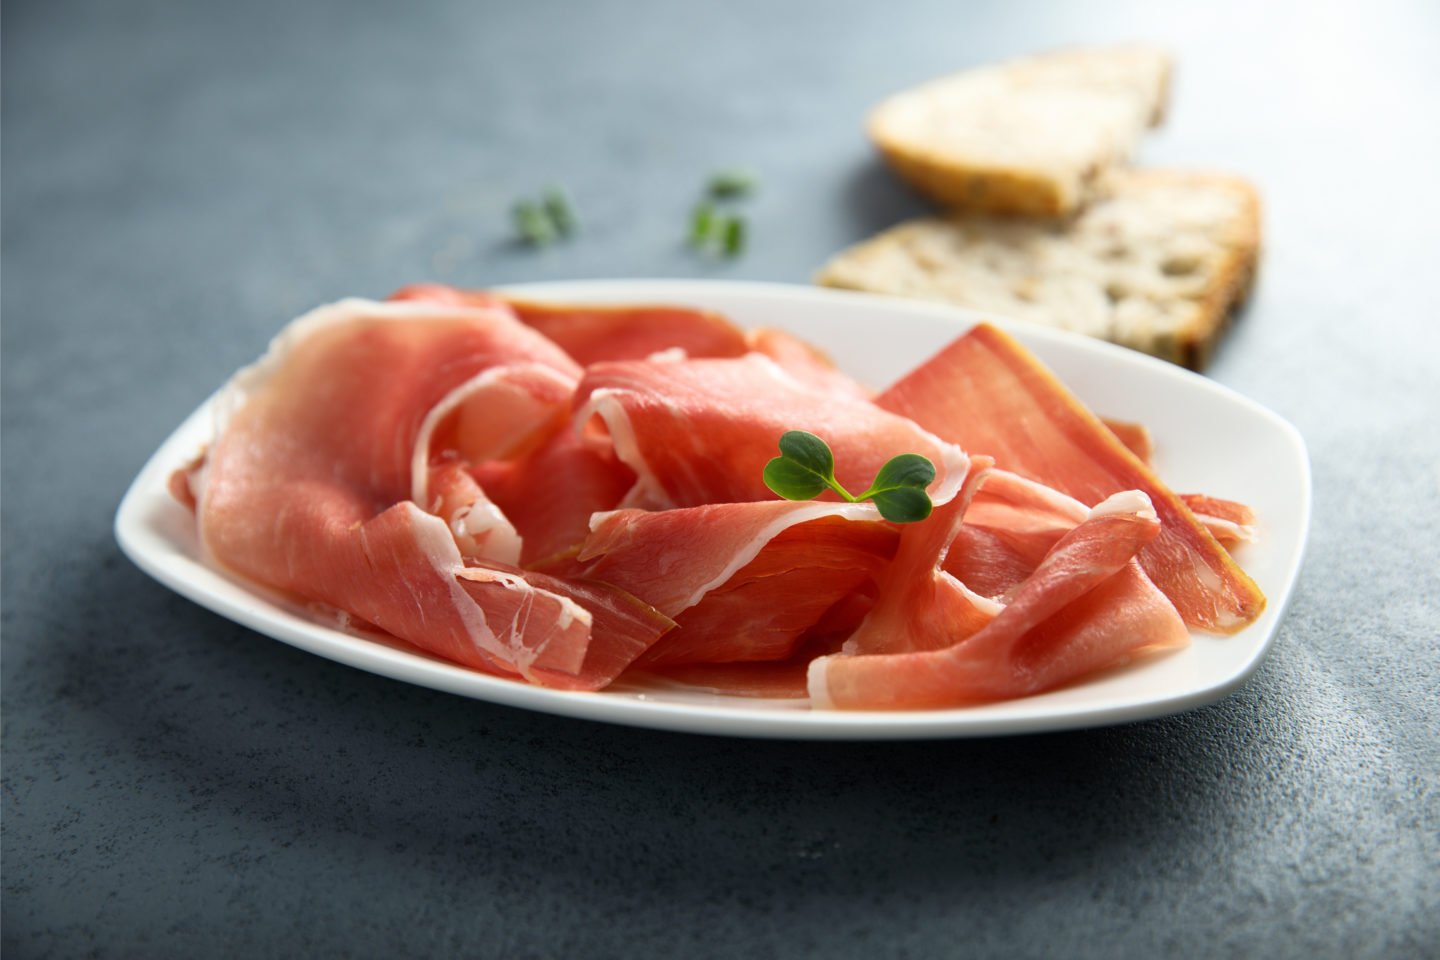 serrano ham slices on white plate